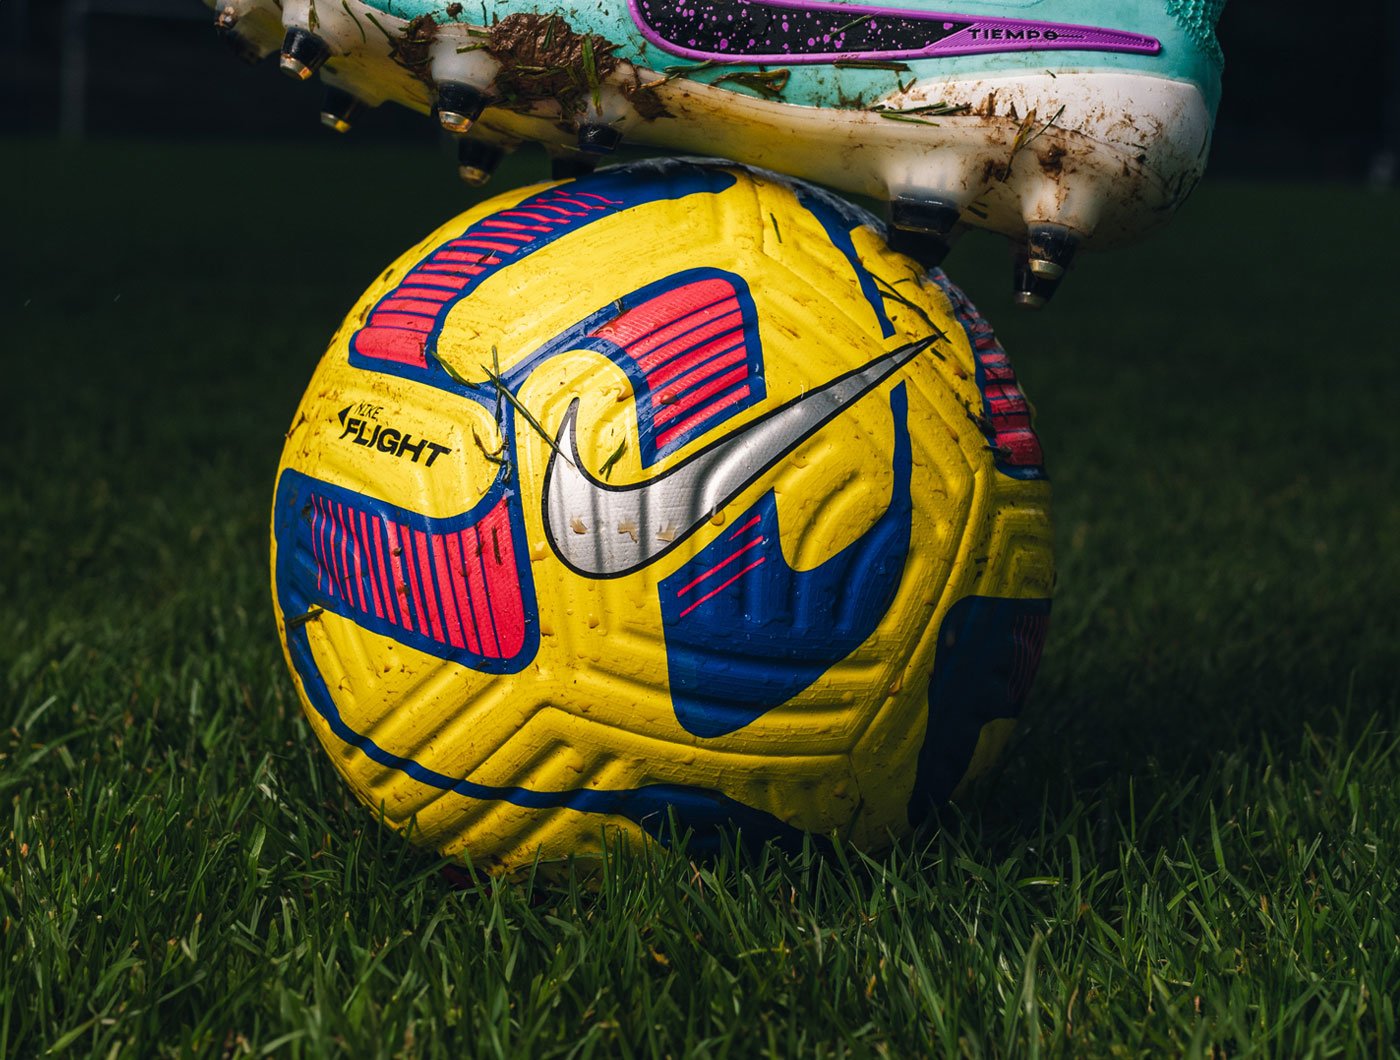 Nike Footballs featuring the High-Vis Nike Premier League Pro Flight Ball